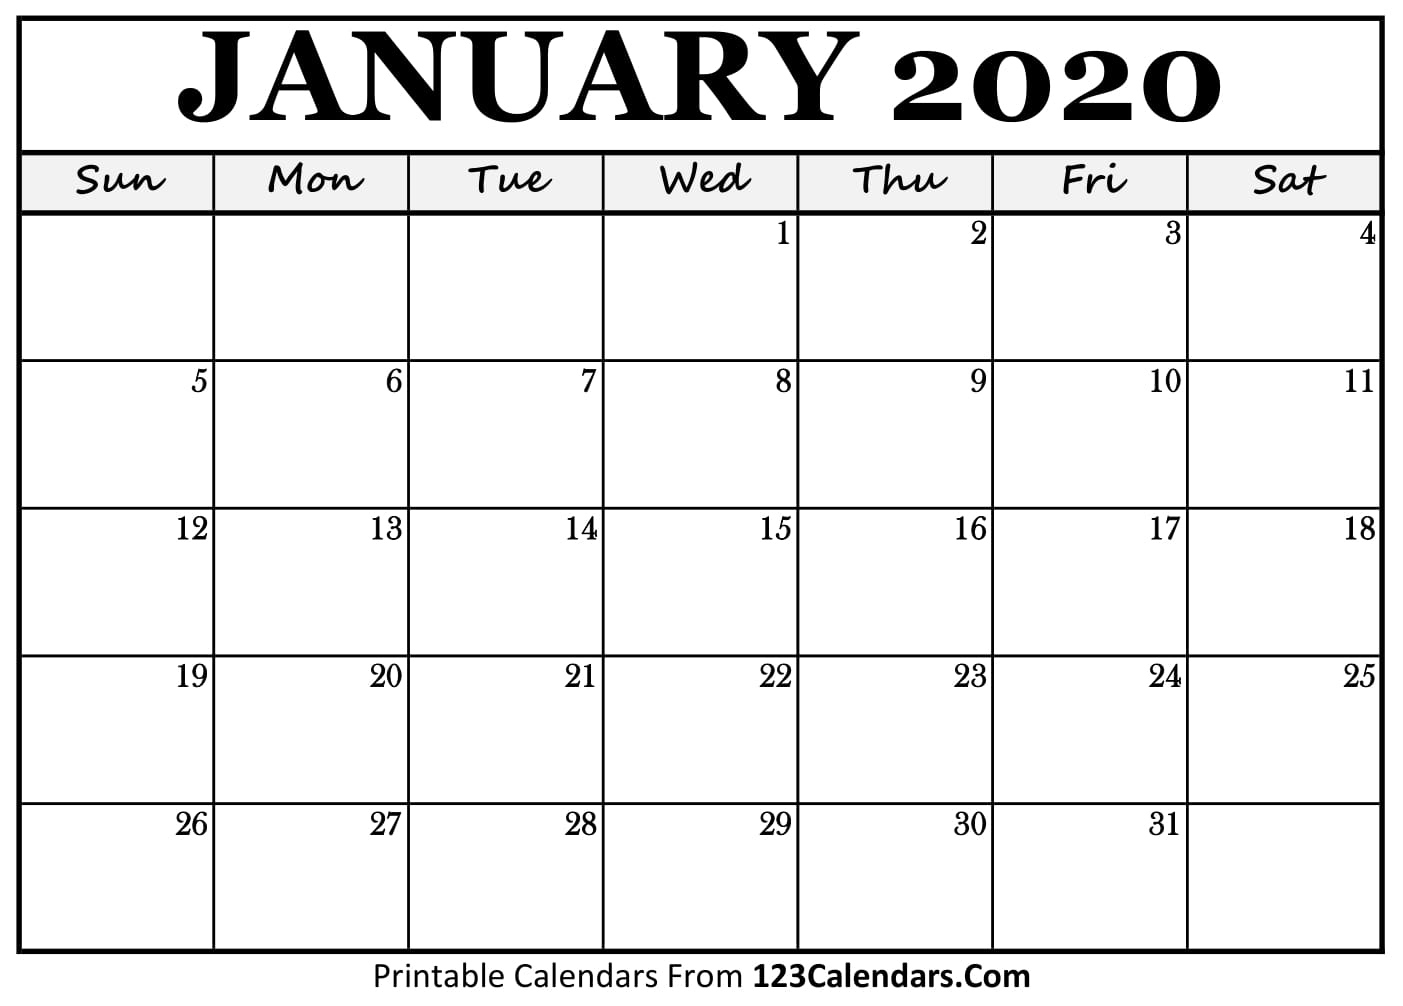 Free Printable Calendar | 123Calendars Blank Calendar Template 2020 No Weekends